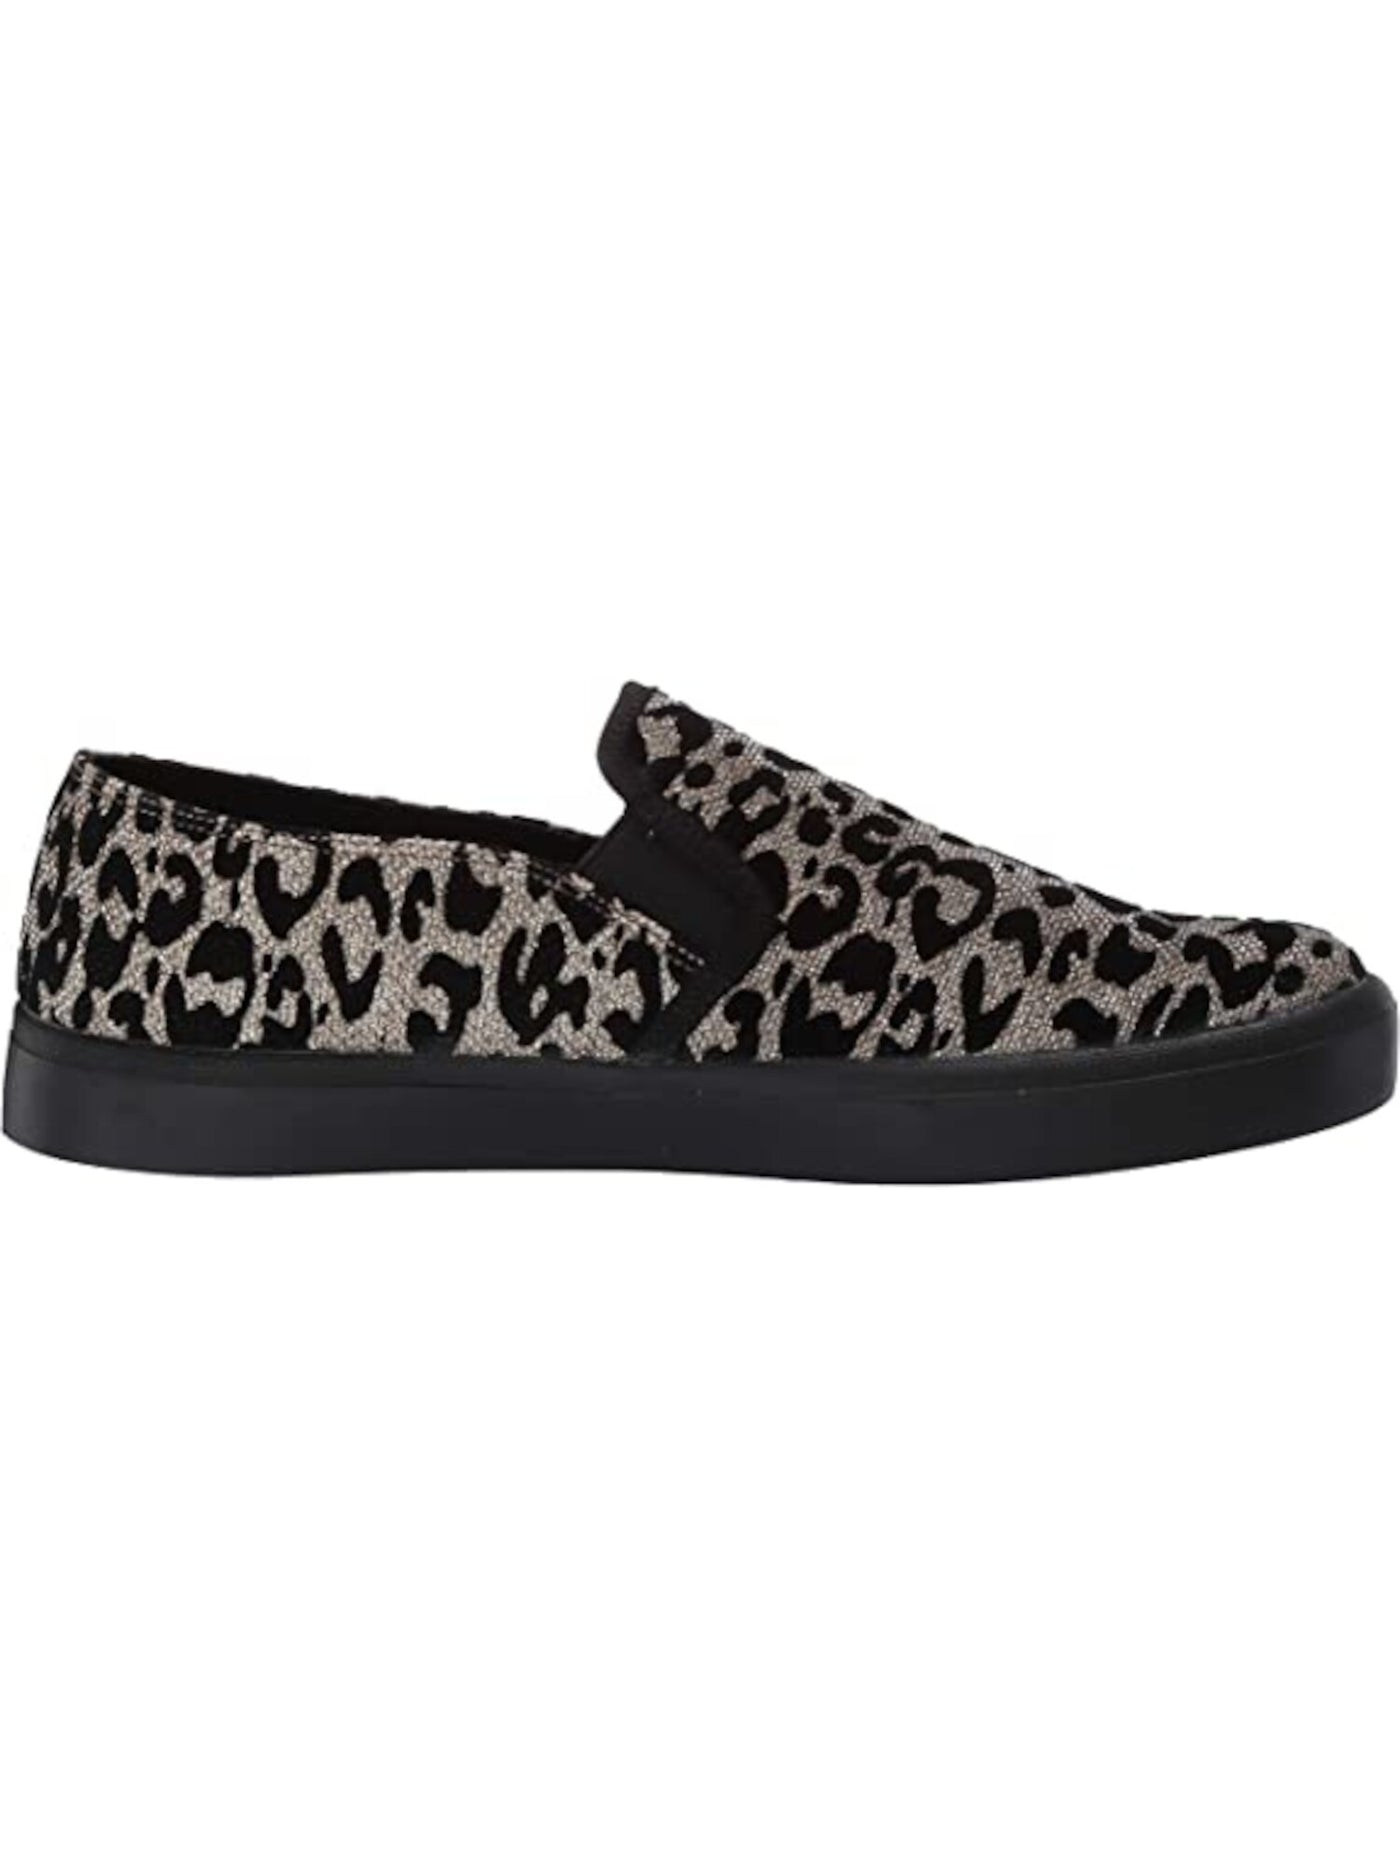 JESSICA SIMPSON Womens Black Leopard Print Side Gore Cushioned Dinellia Round Toe Platform Slip On Flats Shoes 5 M